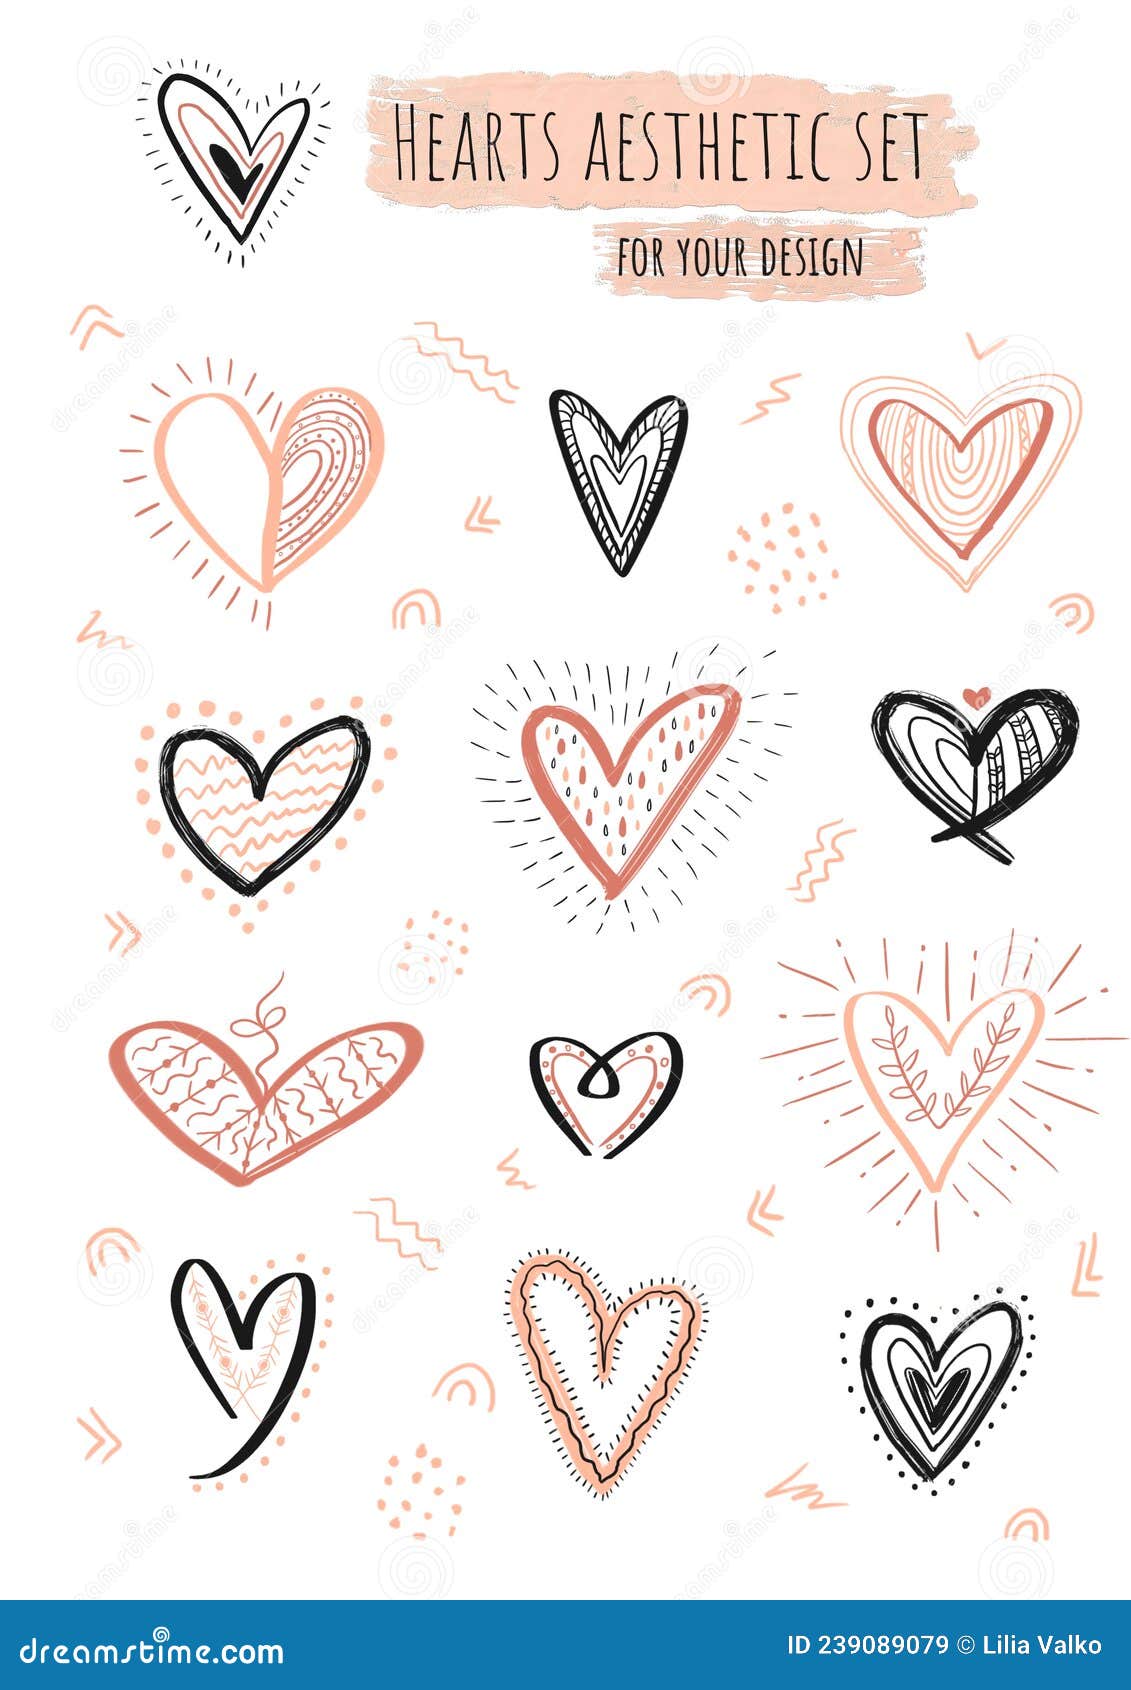 Hearts aesthetic cet stock illustration. Illustration of black - 239089079